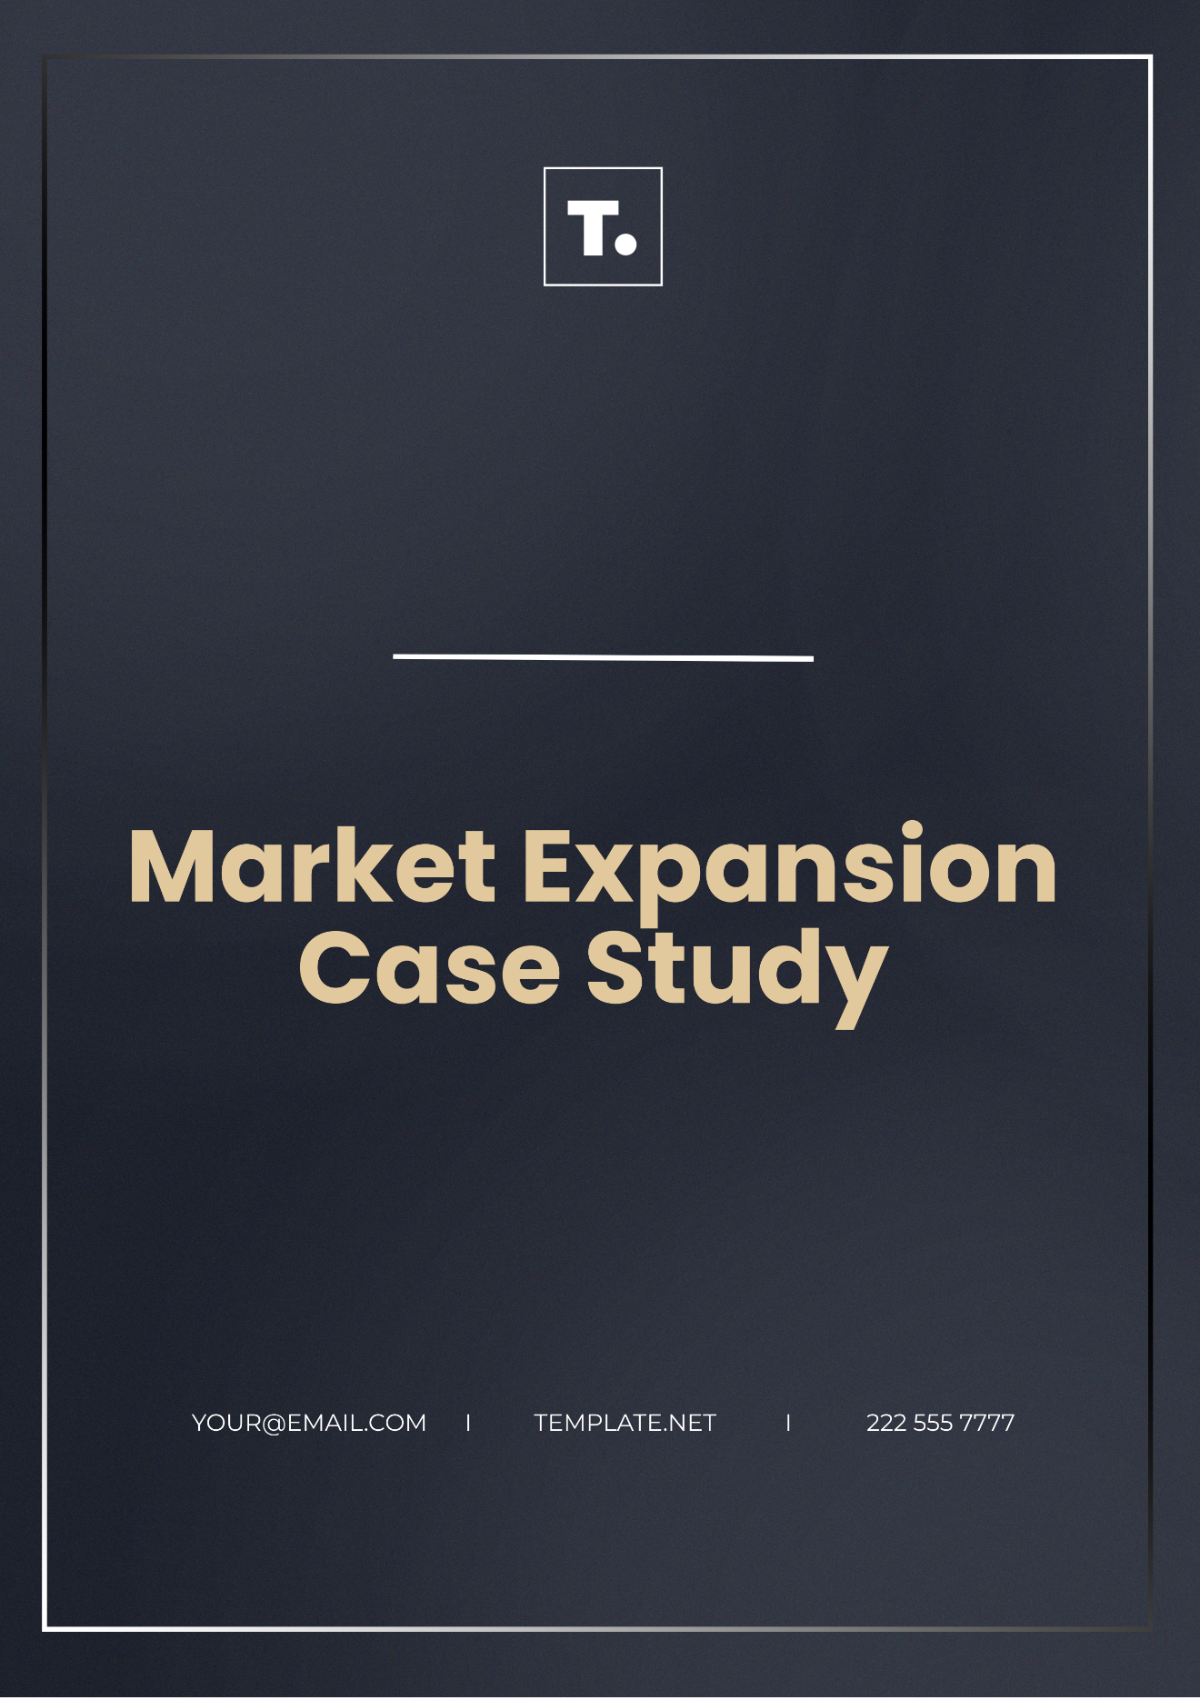 Market Expansion Case Study Template